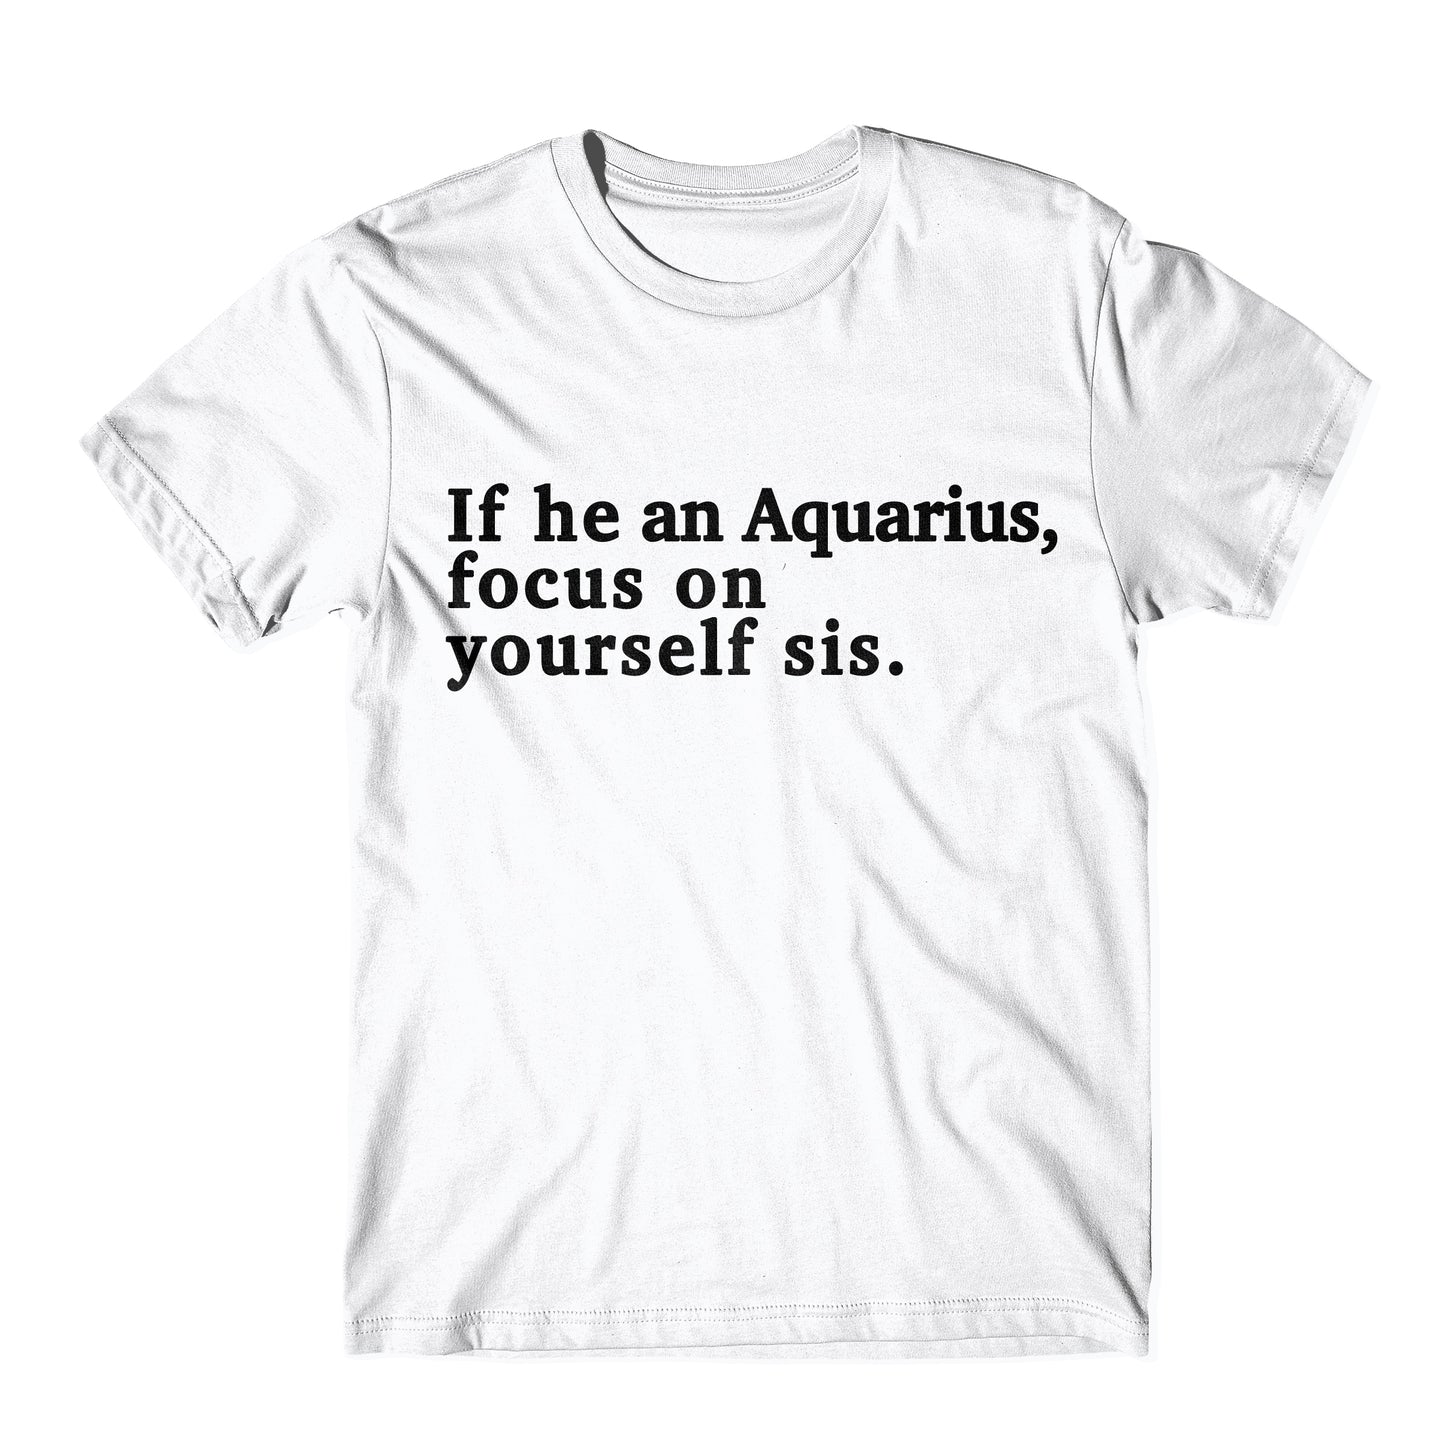 "If He An Aquarius, Focus On Yourself Sis" Tee